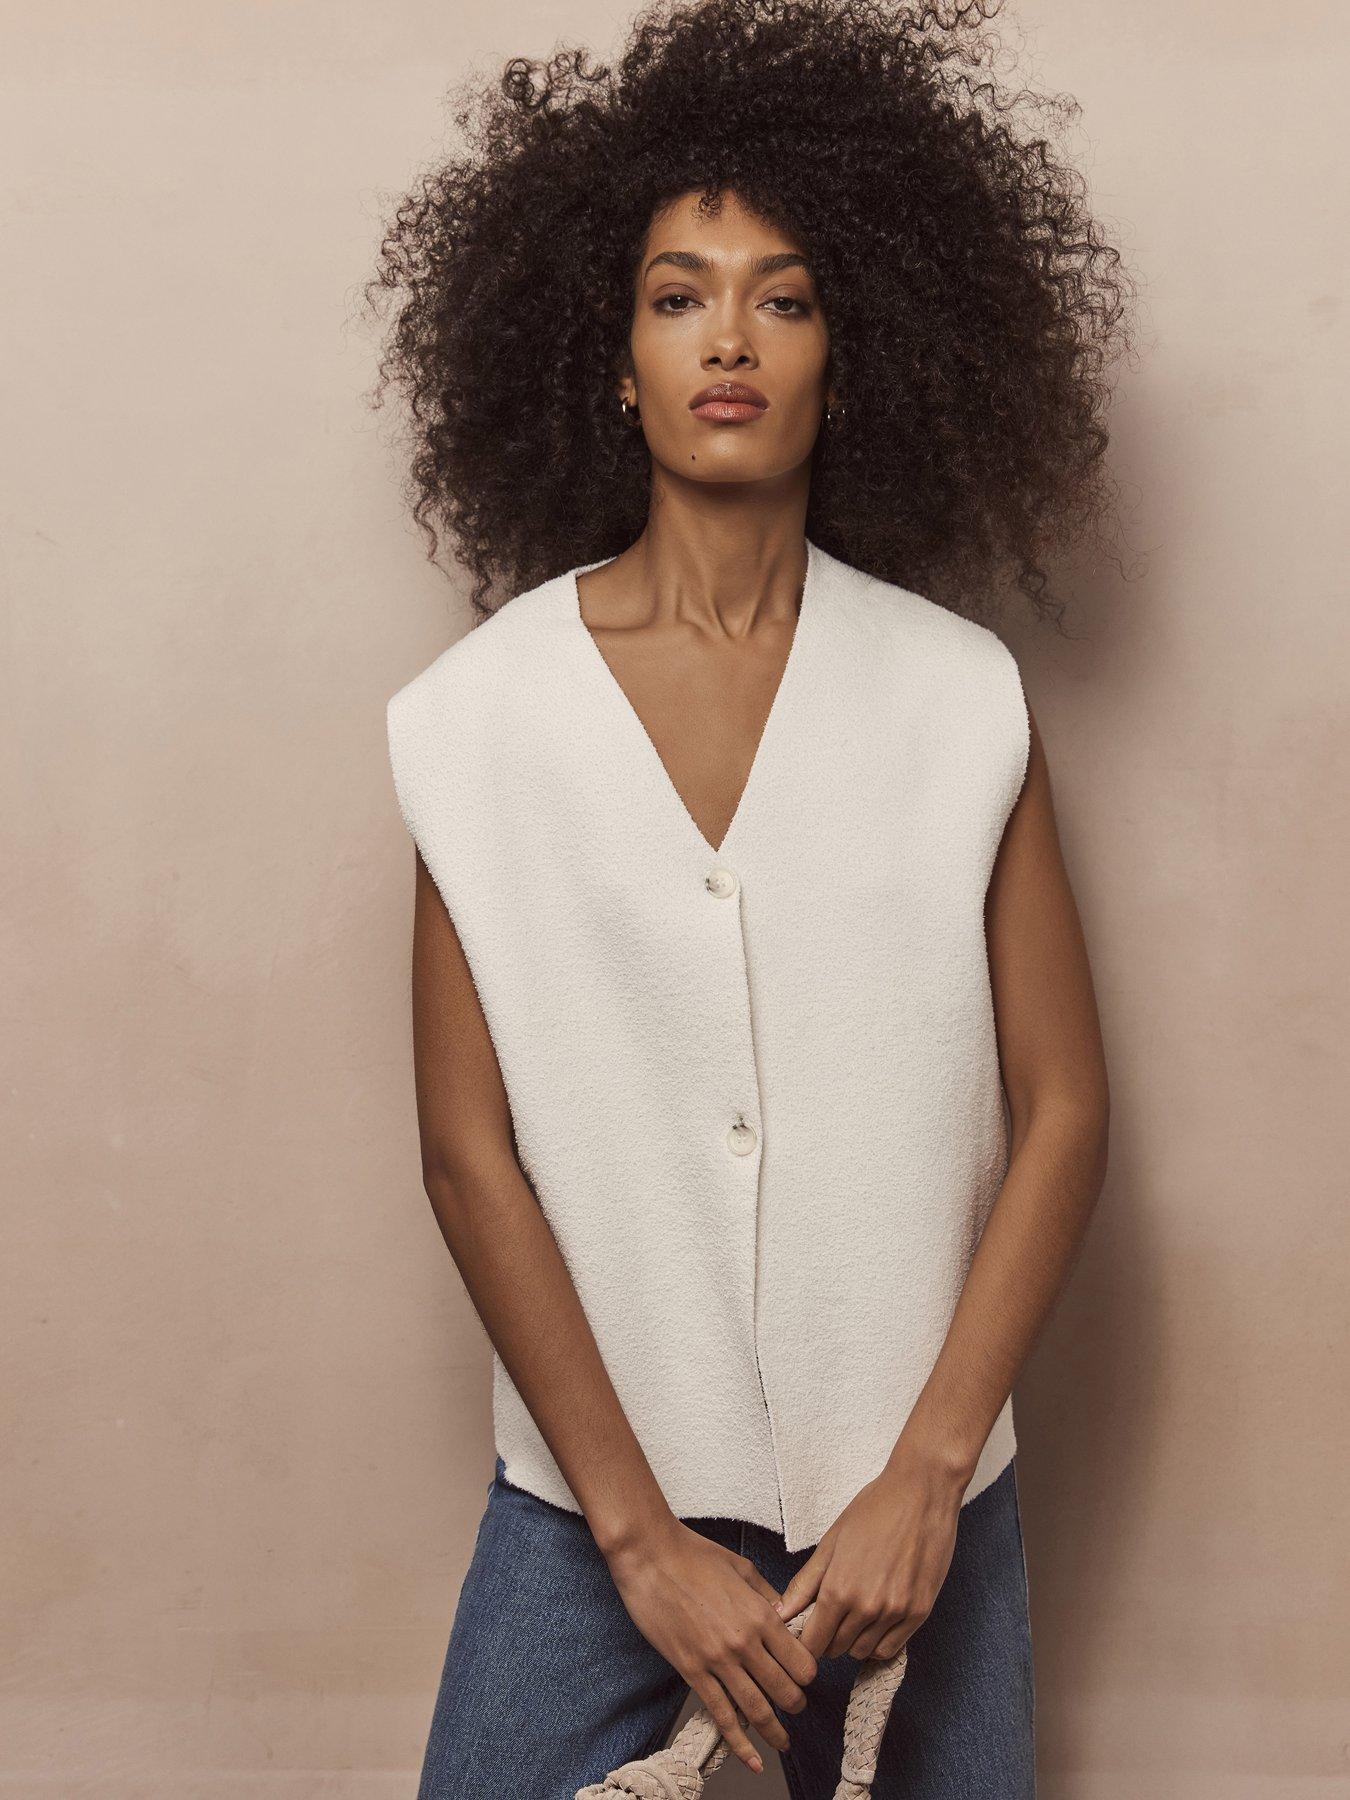 Women's V Neck Knit Tank Tops Casual Knitwear Sleeveless Shirts Sweater Vest